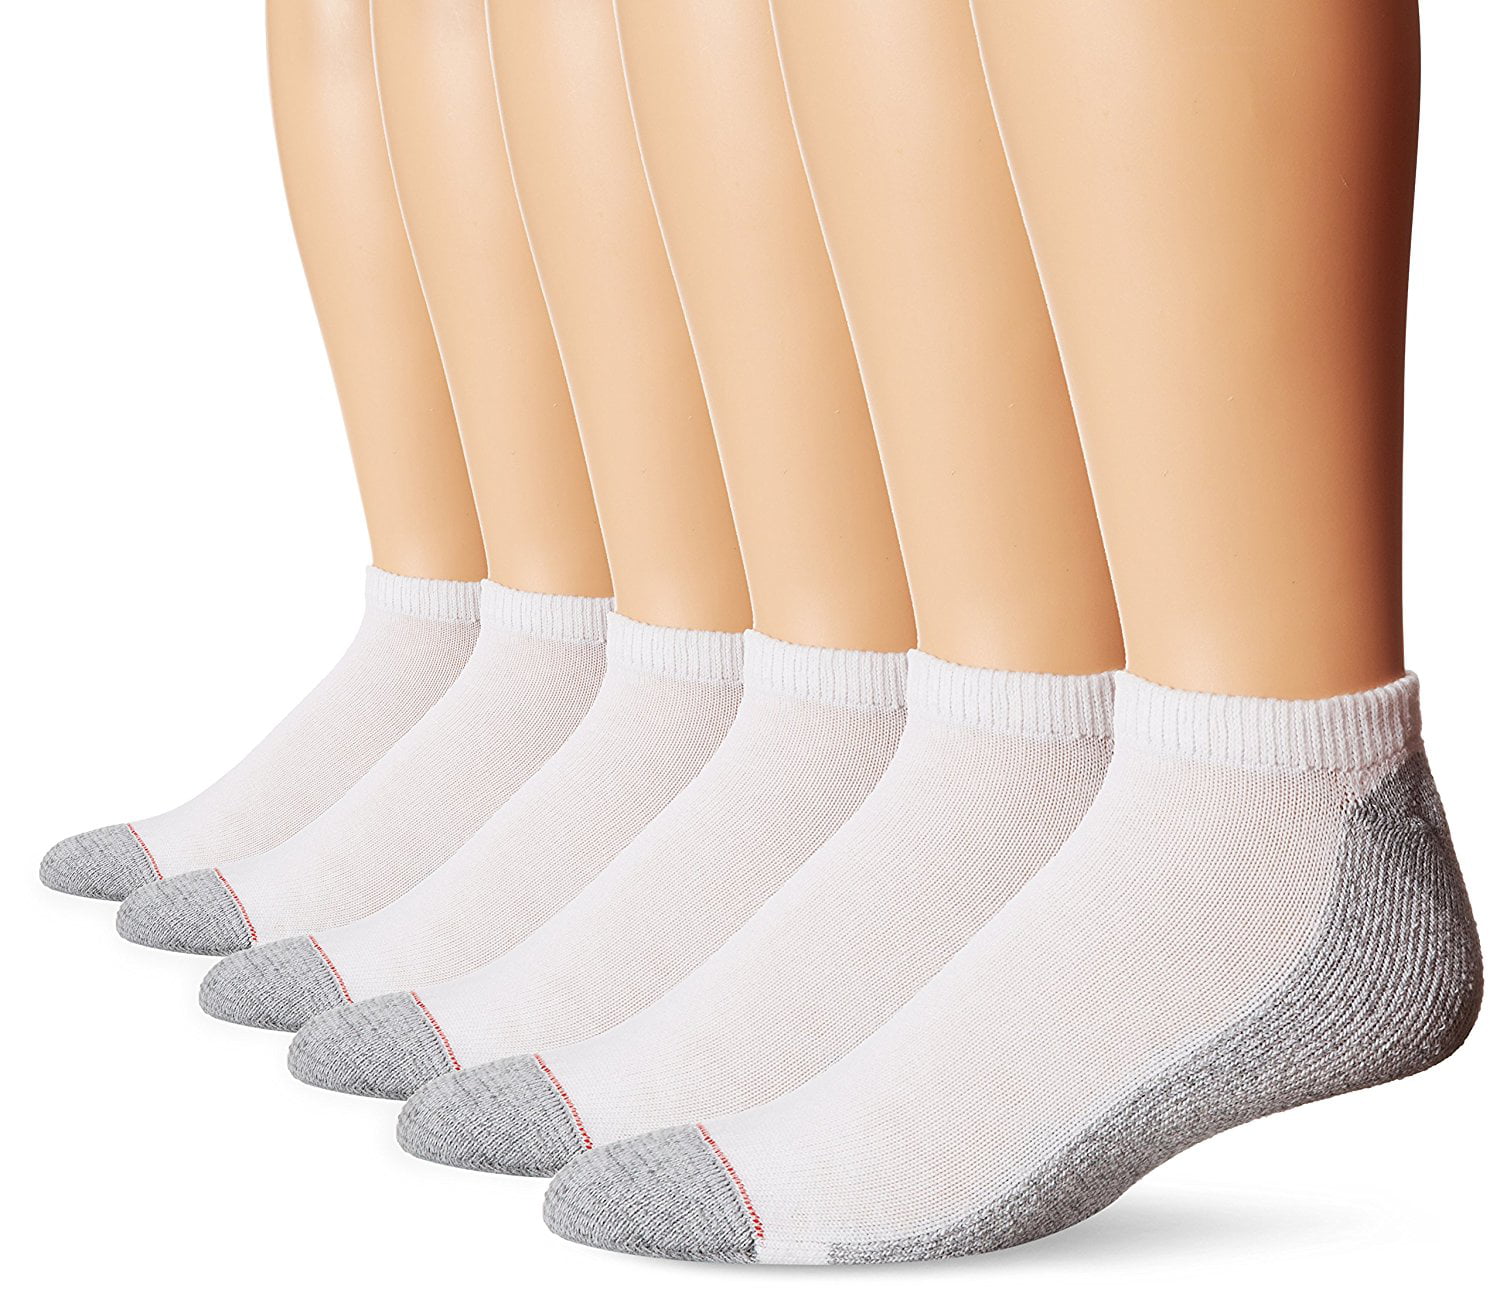 6-12 White Hanes Men's 6 Pack Classics No Show Socks Sock Size 